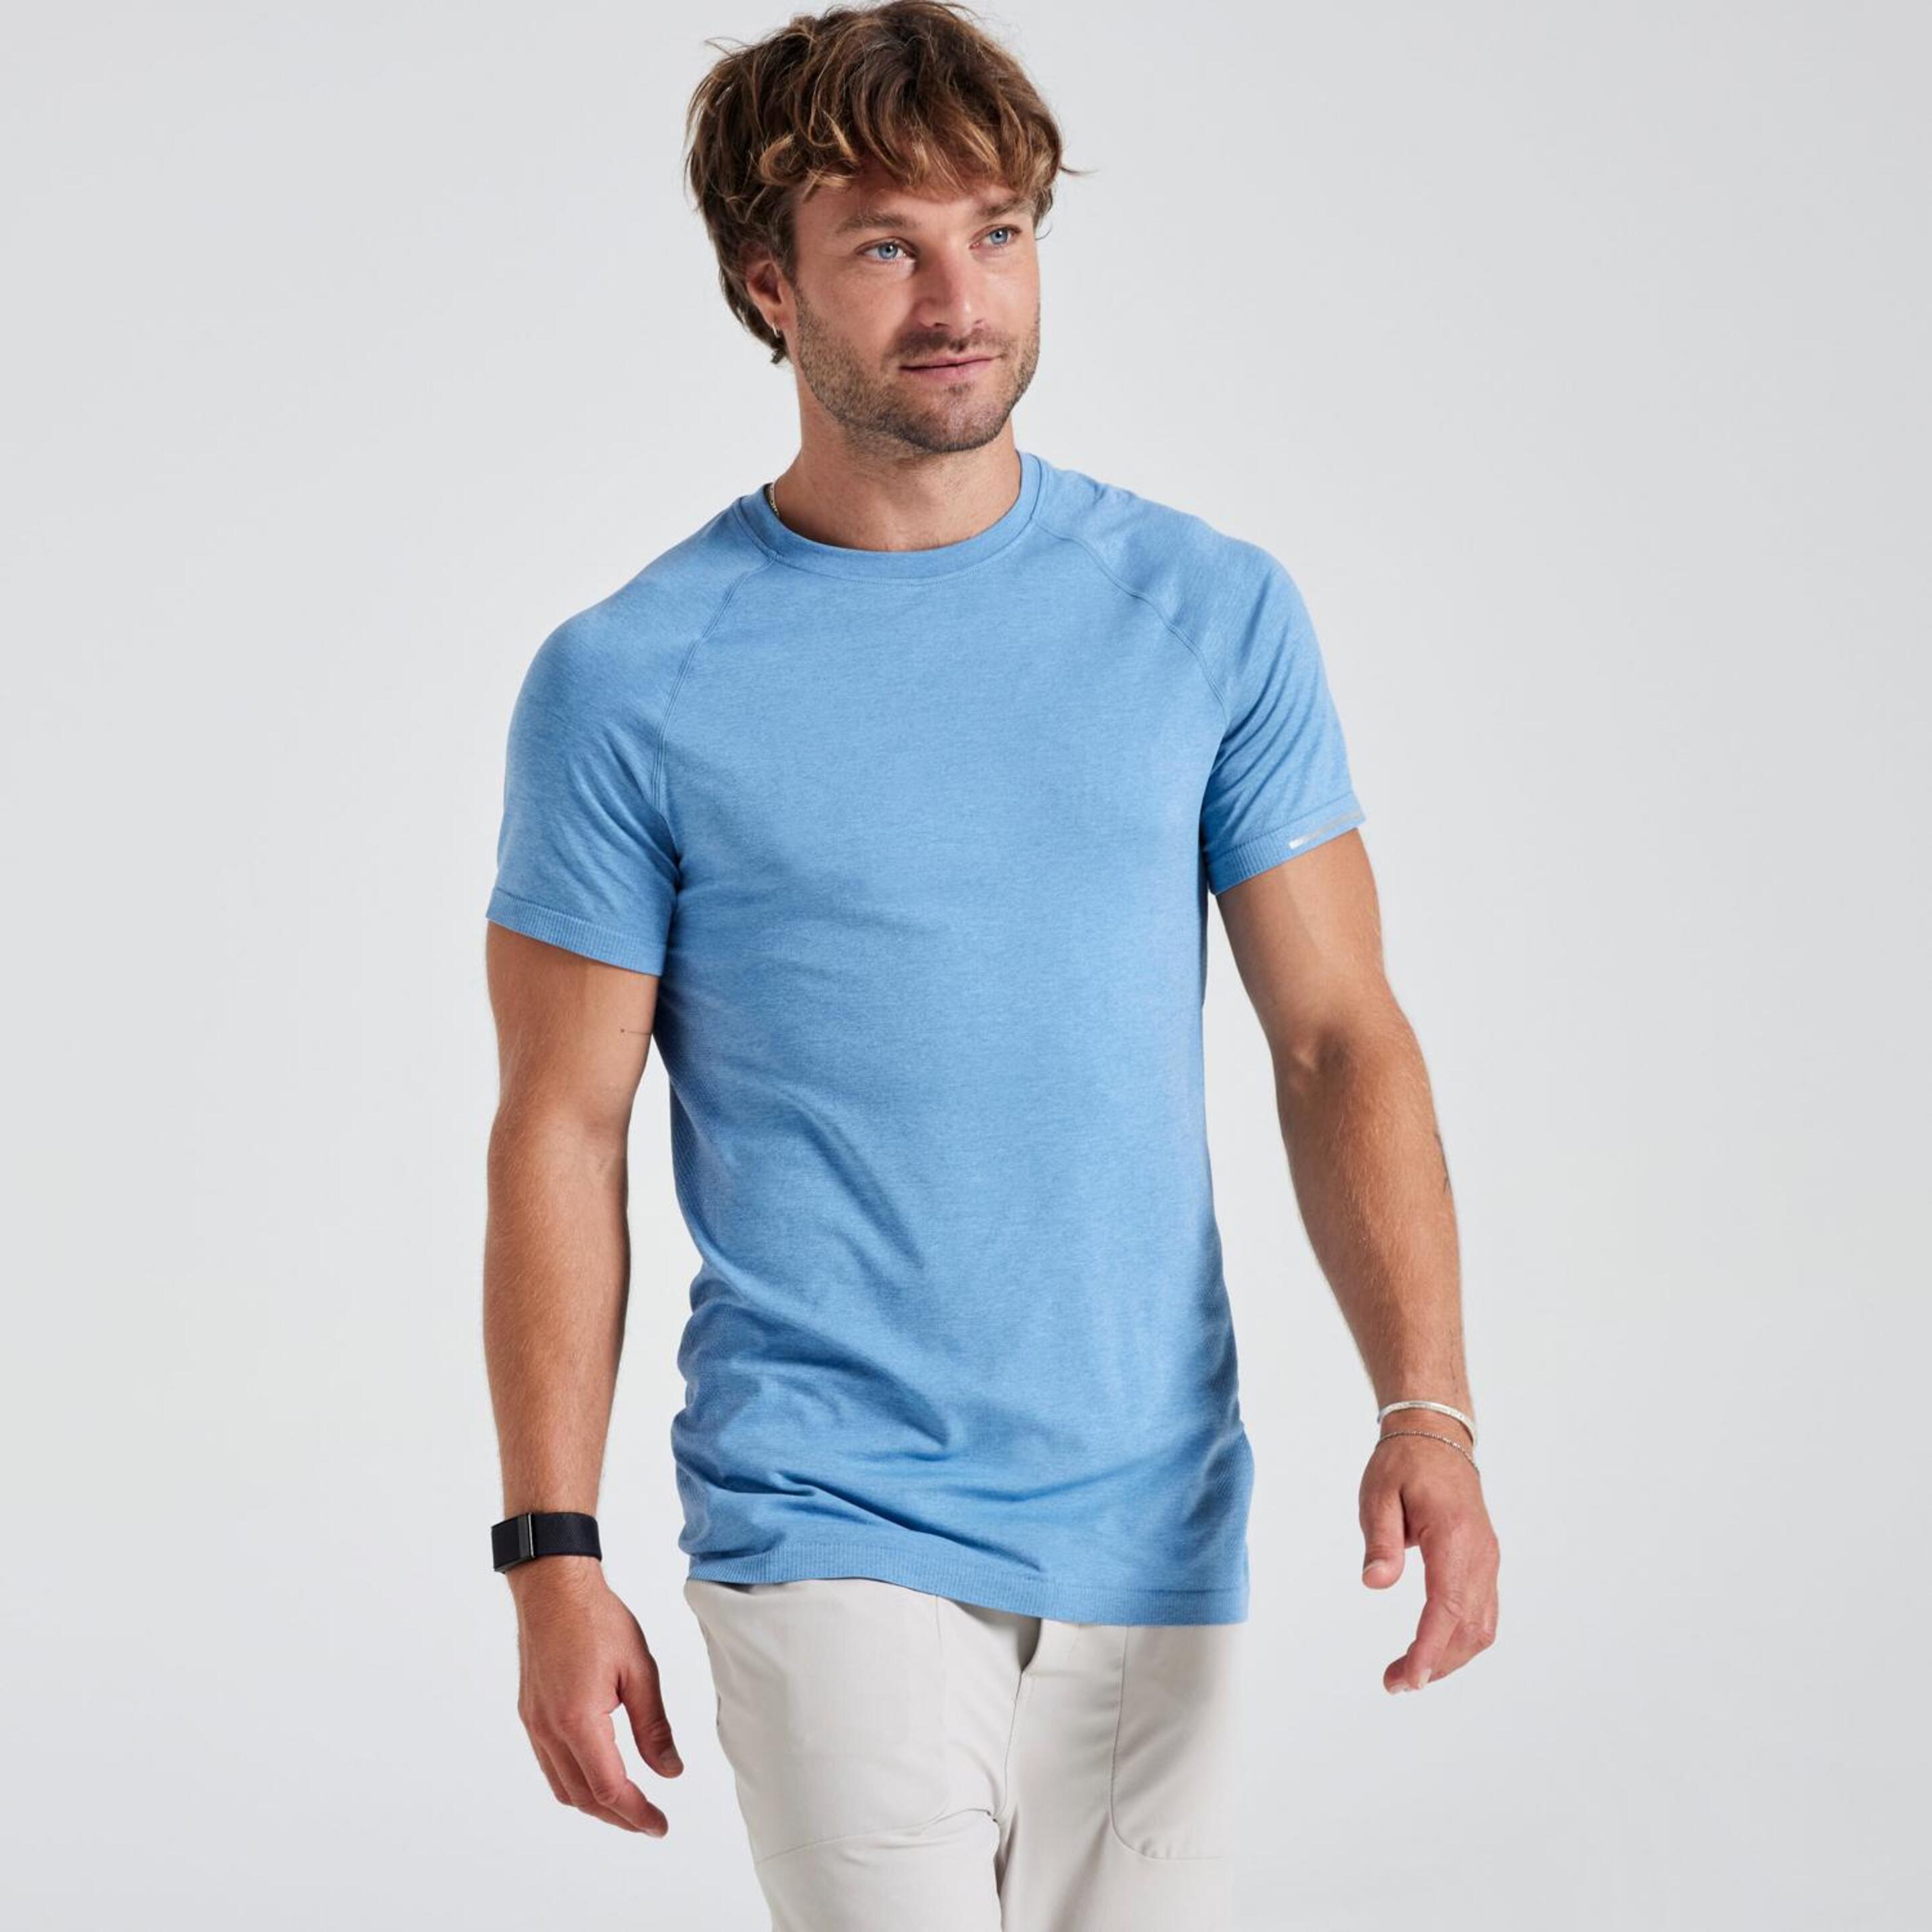 Doone Activ - azul - Camiseta Sin Costuras Hombre